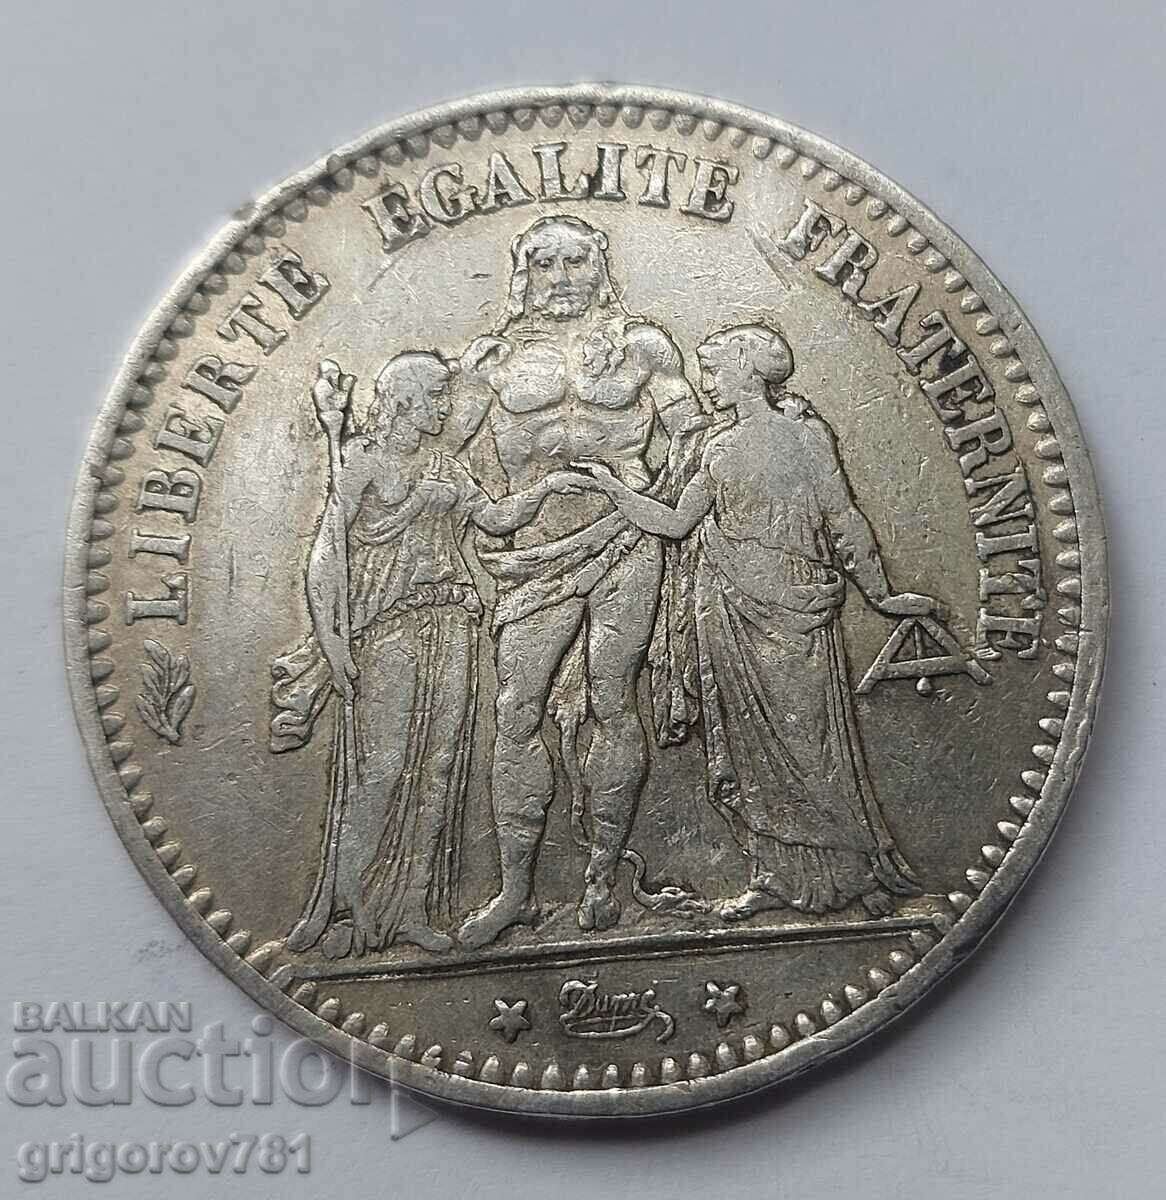 5 Francs Silver France 1874 K Silver Coin #131